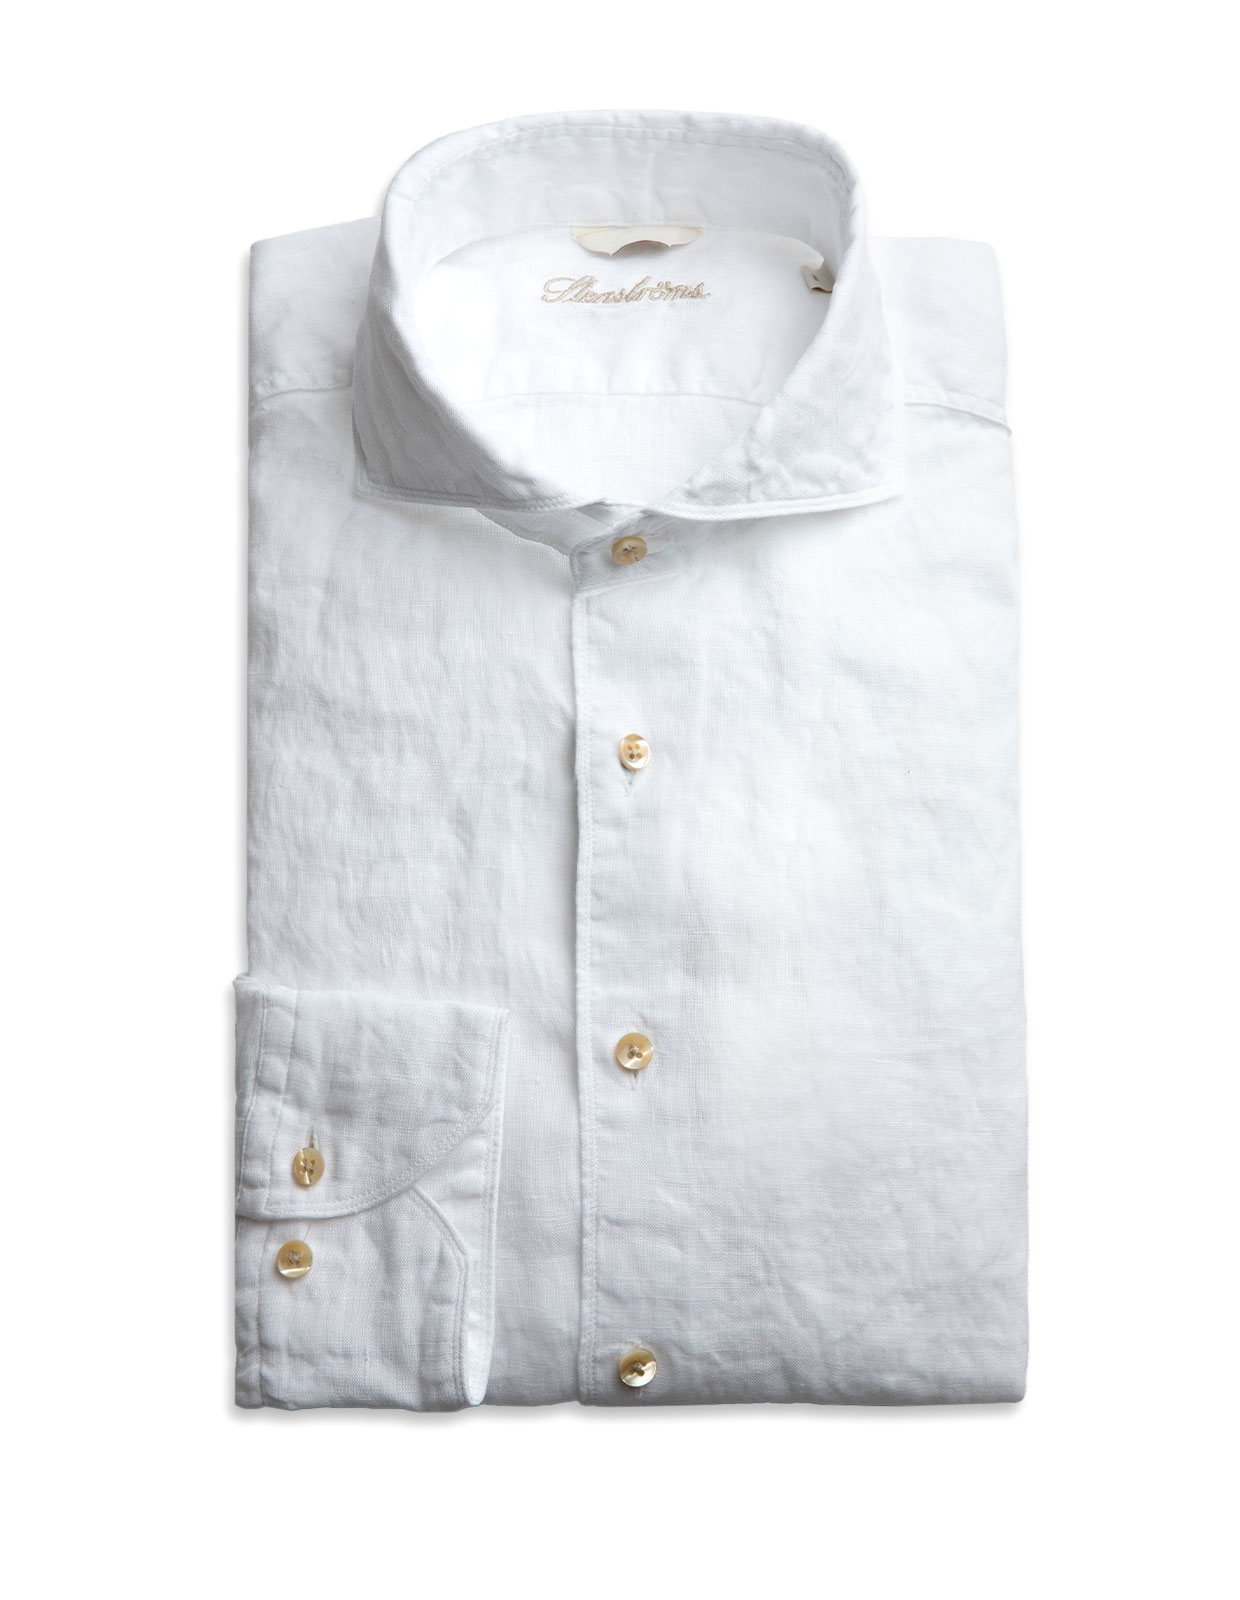 Fitted Body Linen Shirt White Stl XXXL